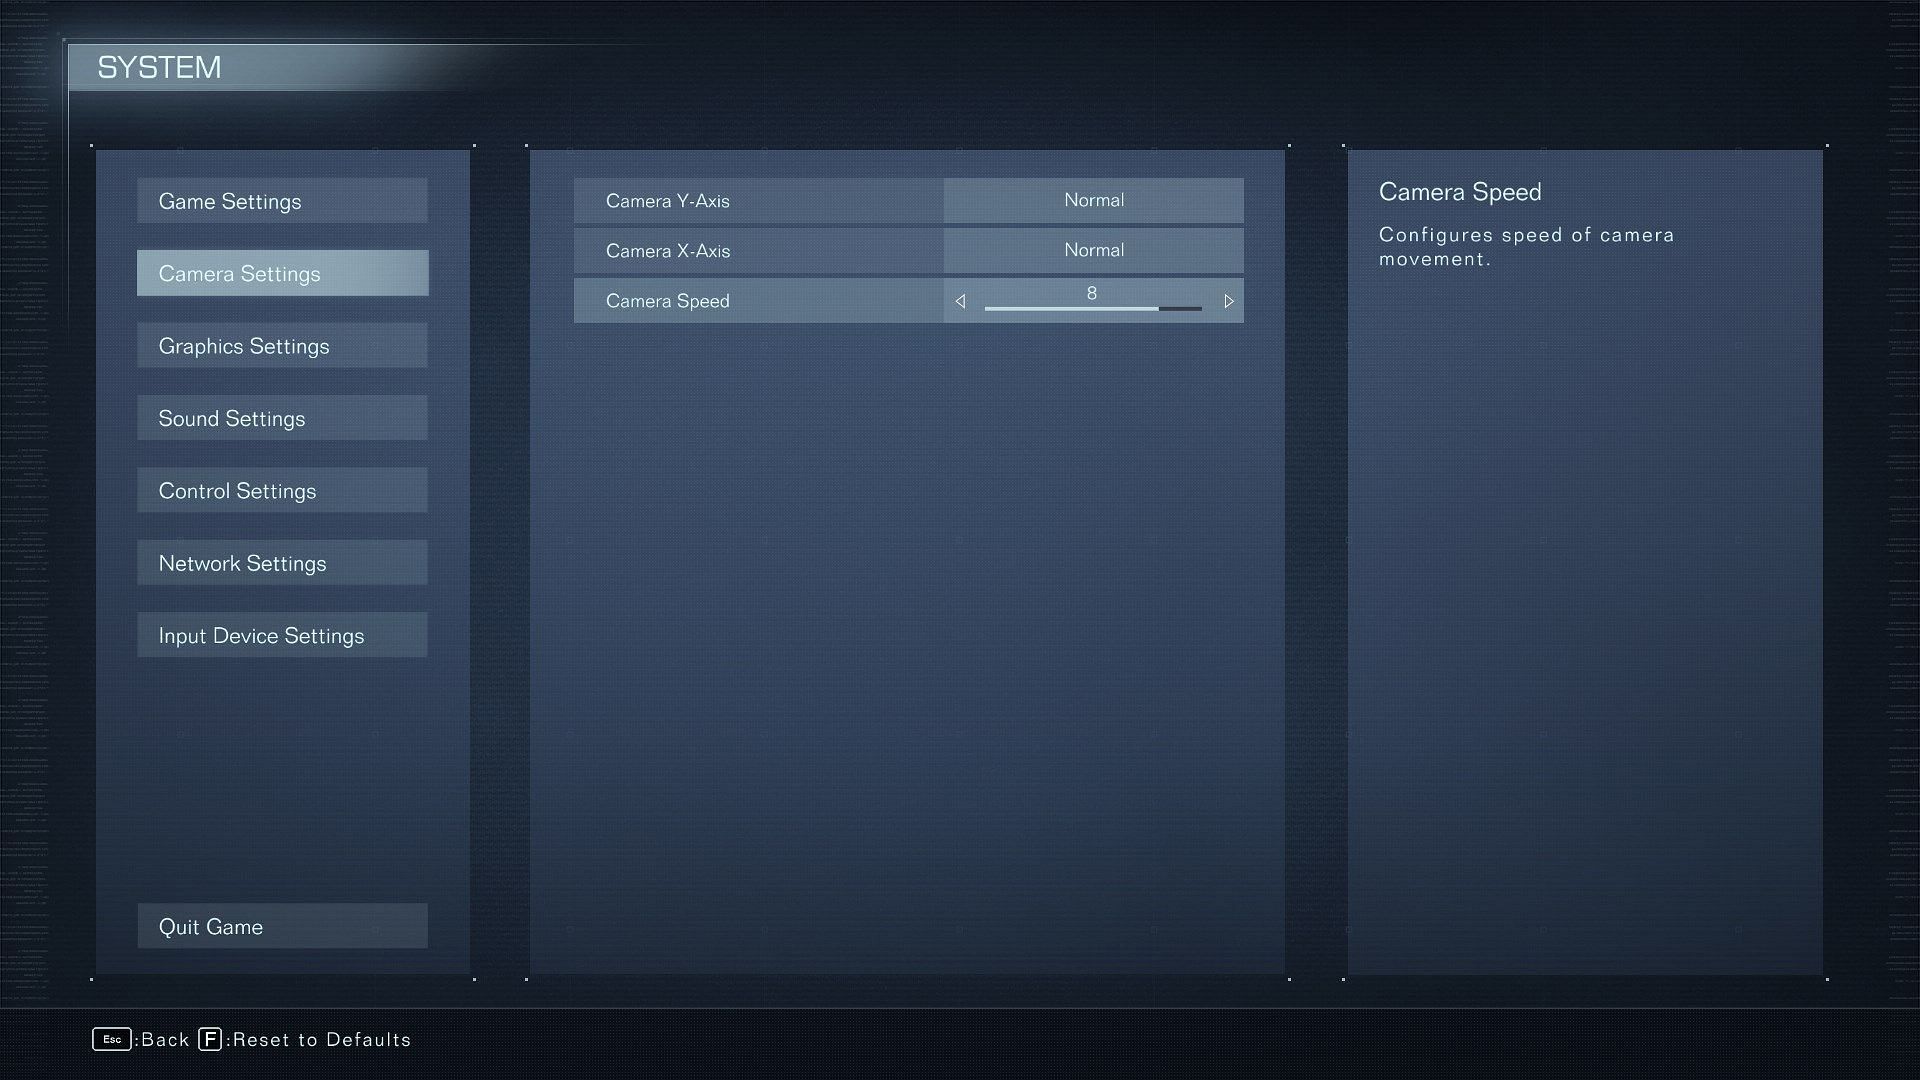 Camera settings for Armored Core 6 (Image via Sportskeeda)